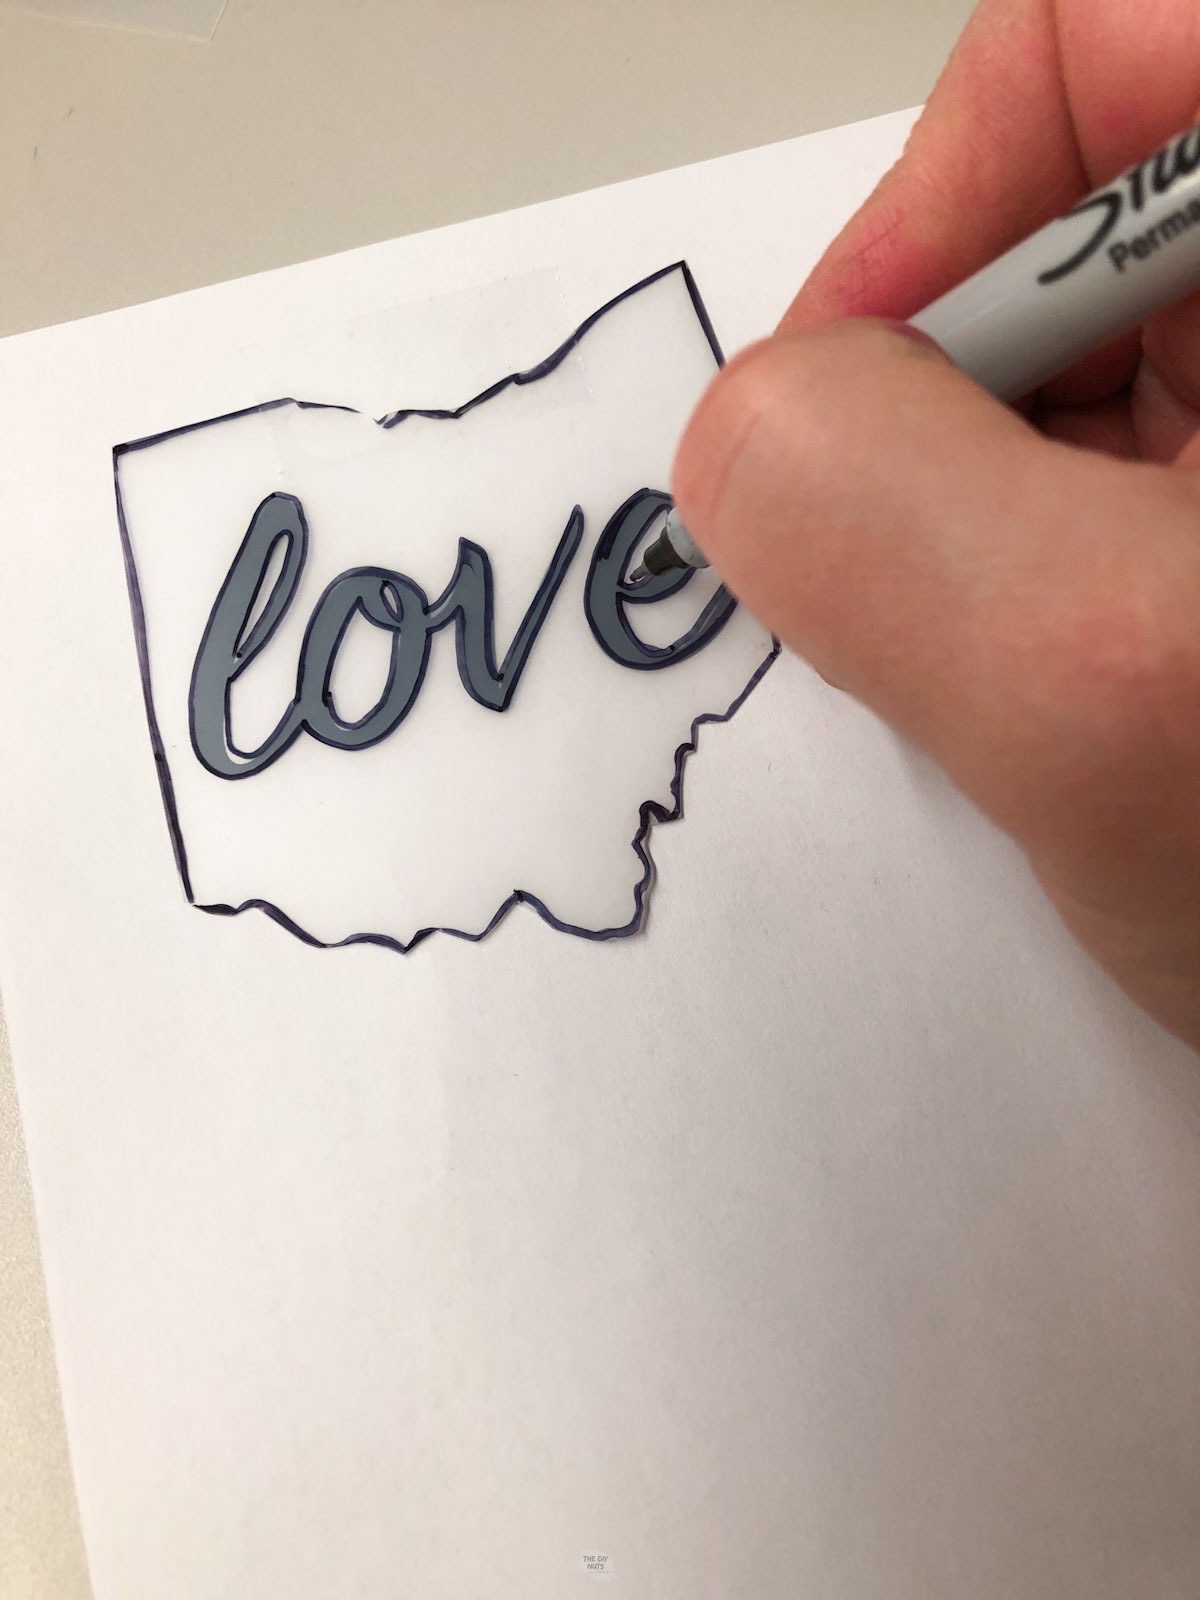 hand tracing Ohio outline on plastic.